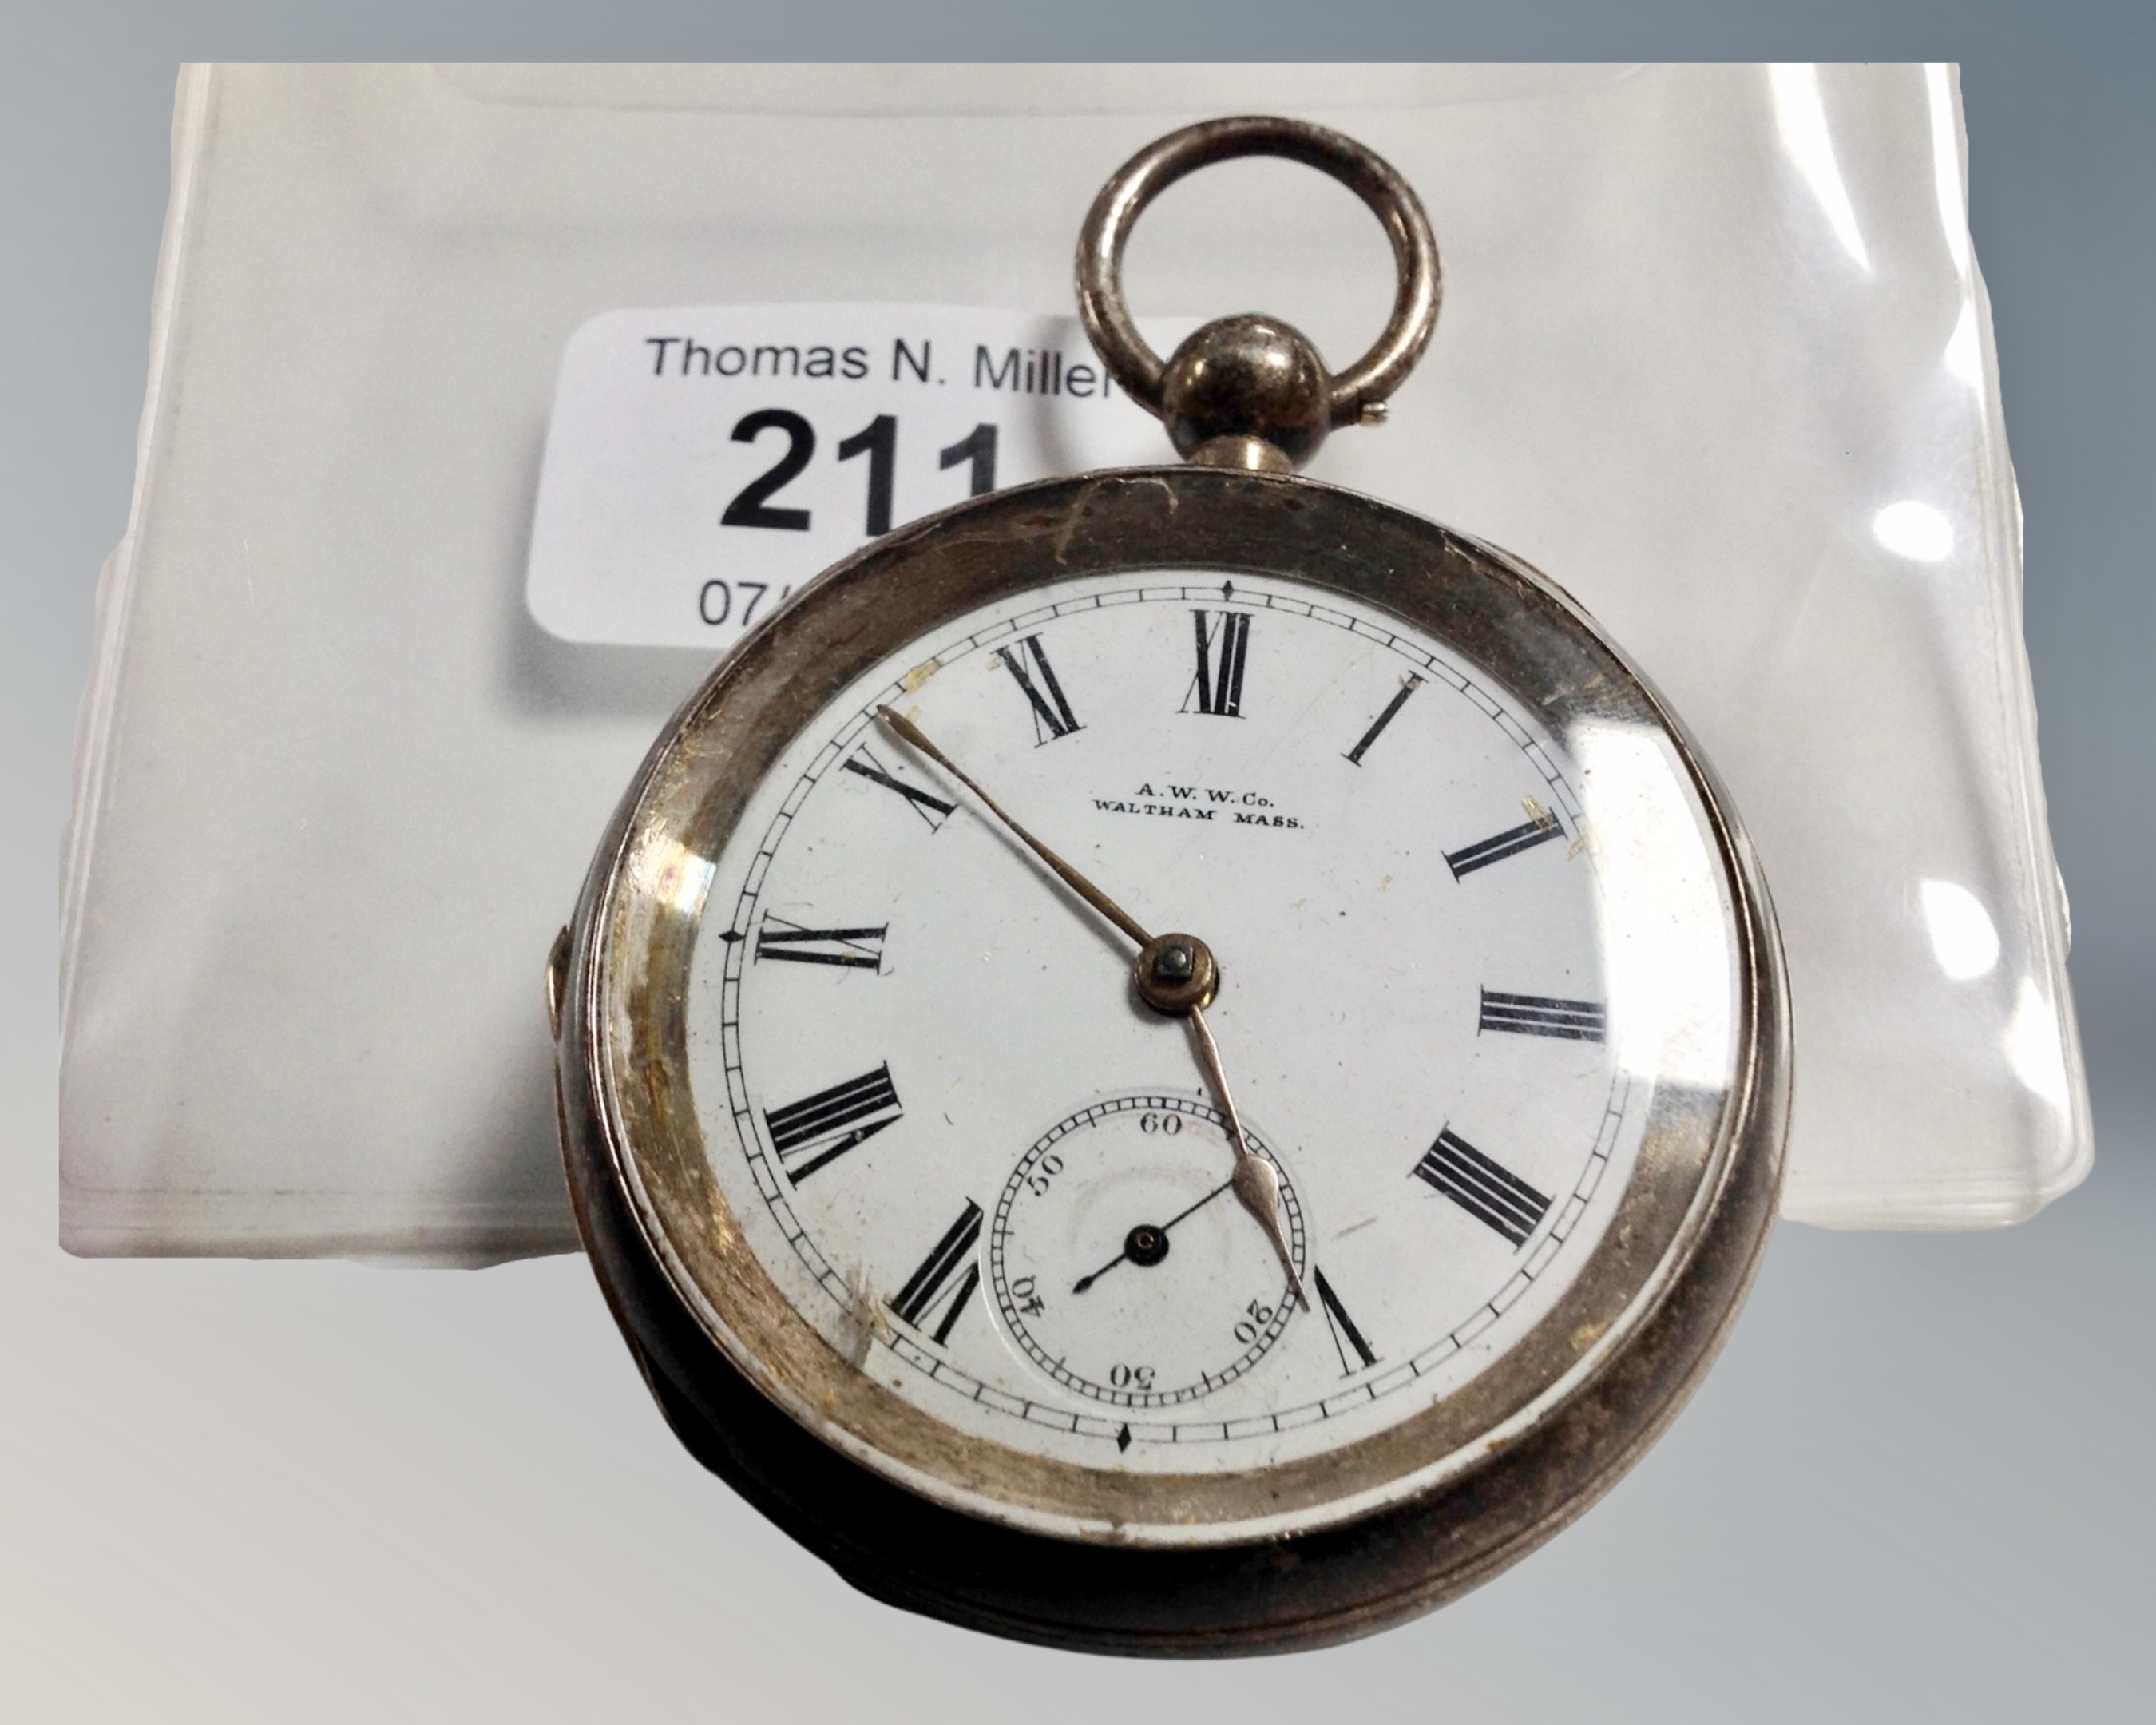 A silver Waltham Mass pocket watch